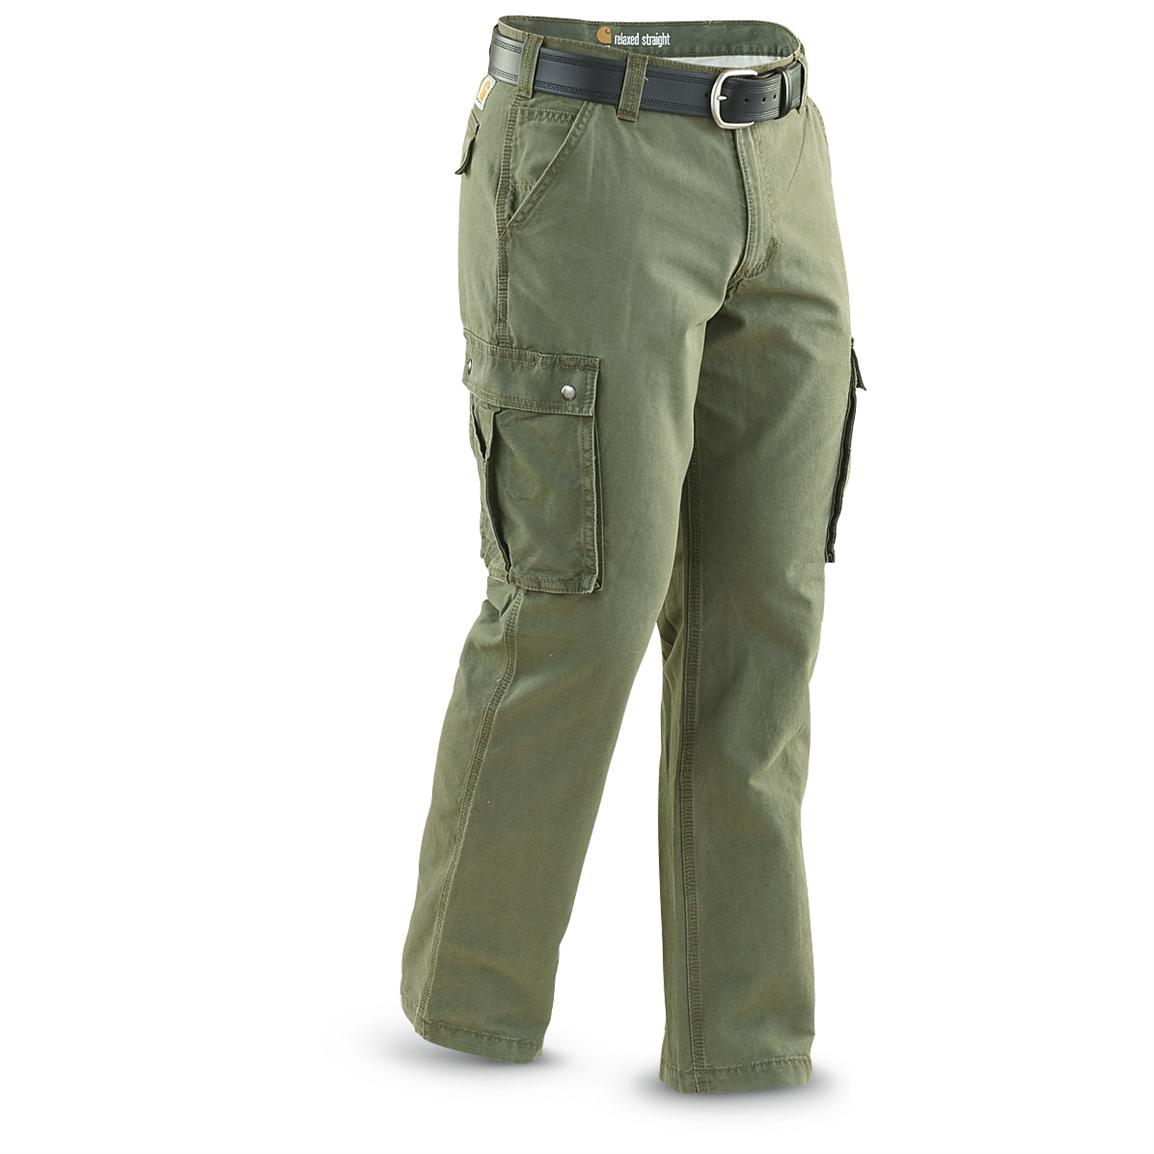 Carhartt Men's Rugged Cargo Pants - 282892, Jeans & Pants at Sportsman ...